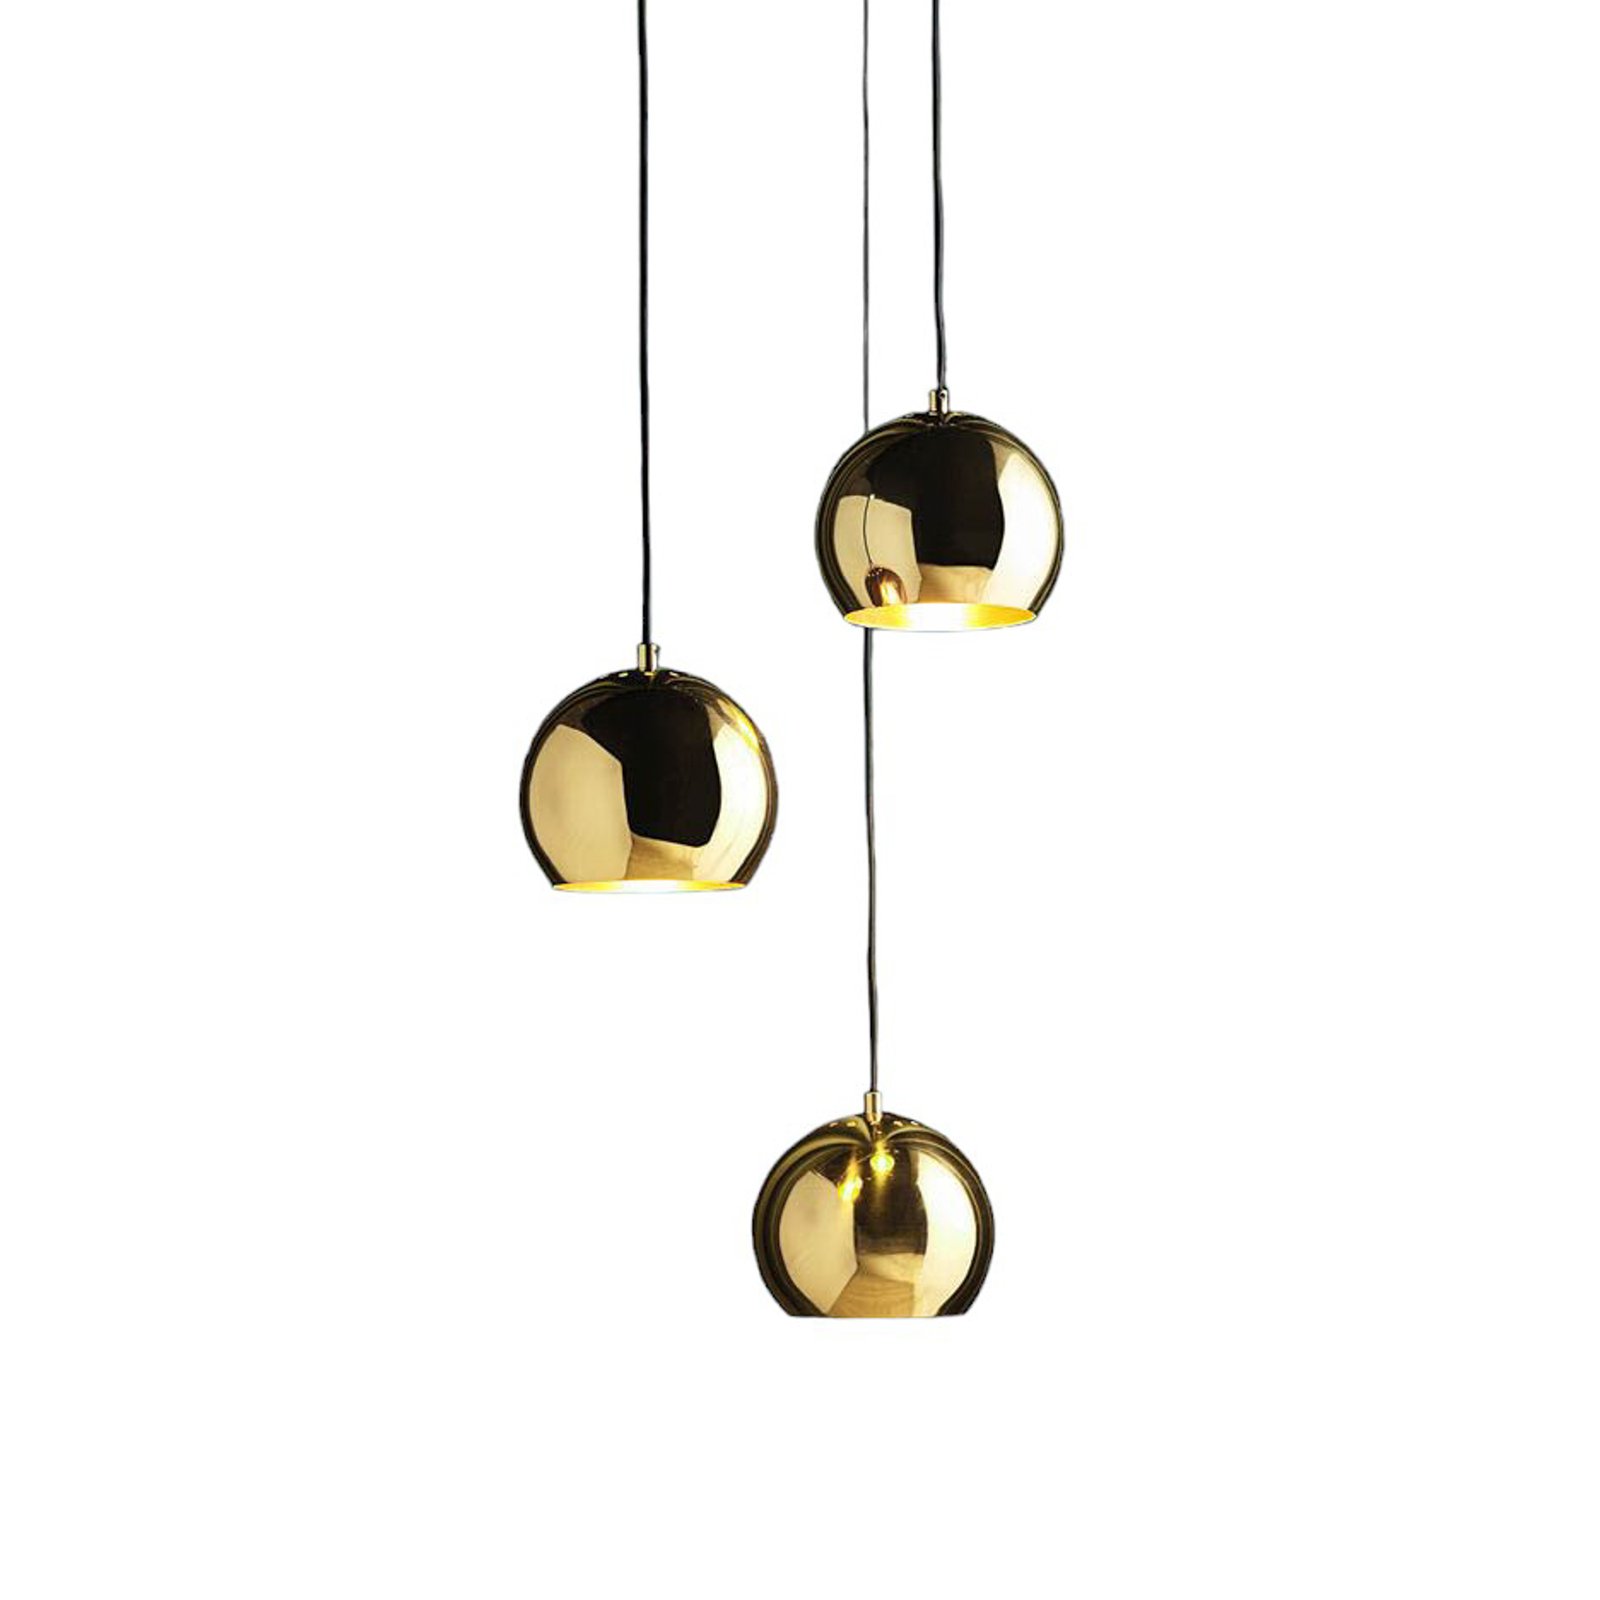 FRANDSEN hanglamp Bal van messing, Ø 18 cm